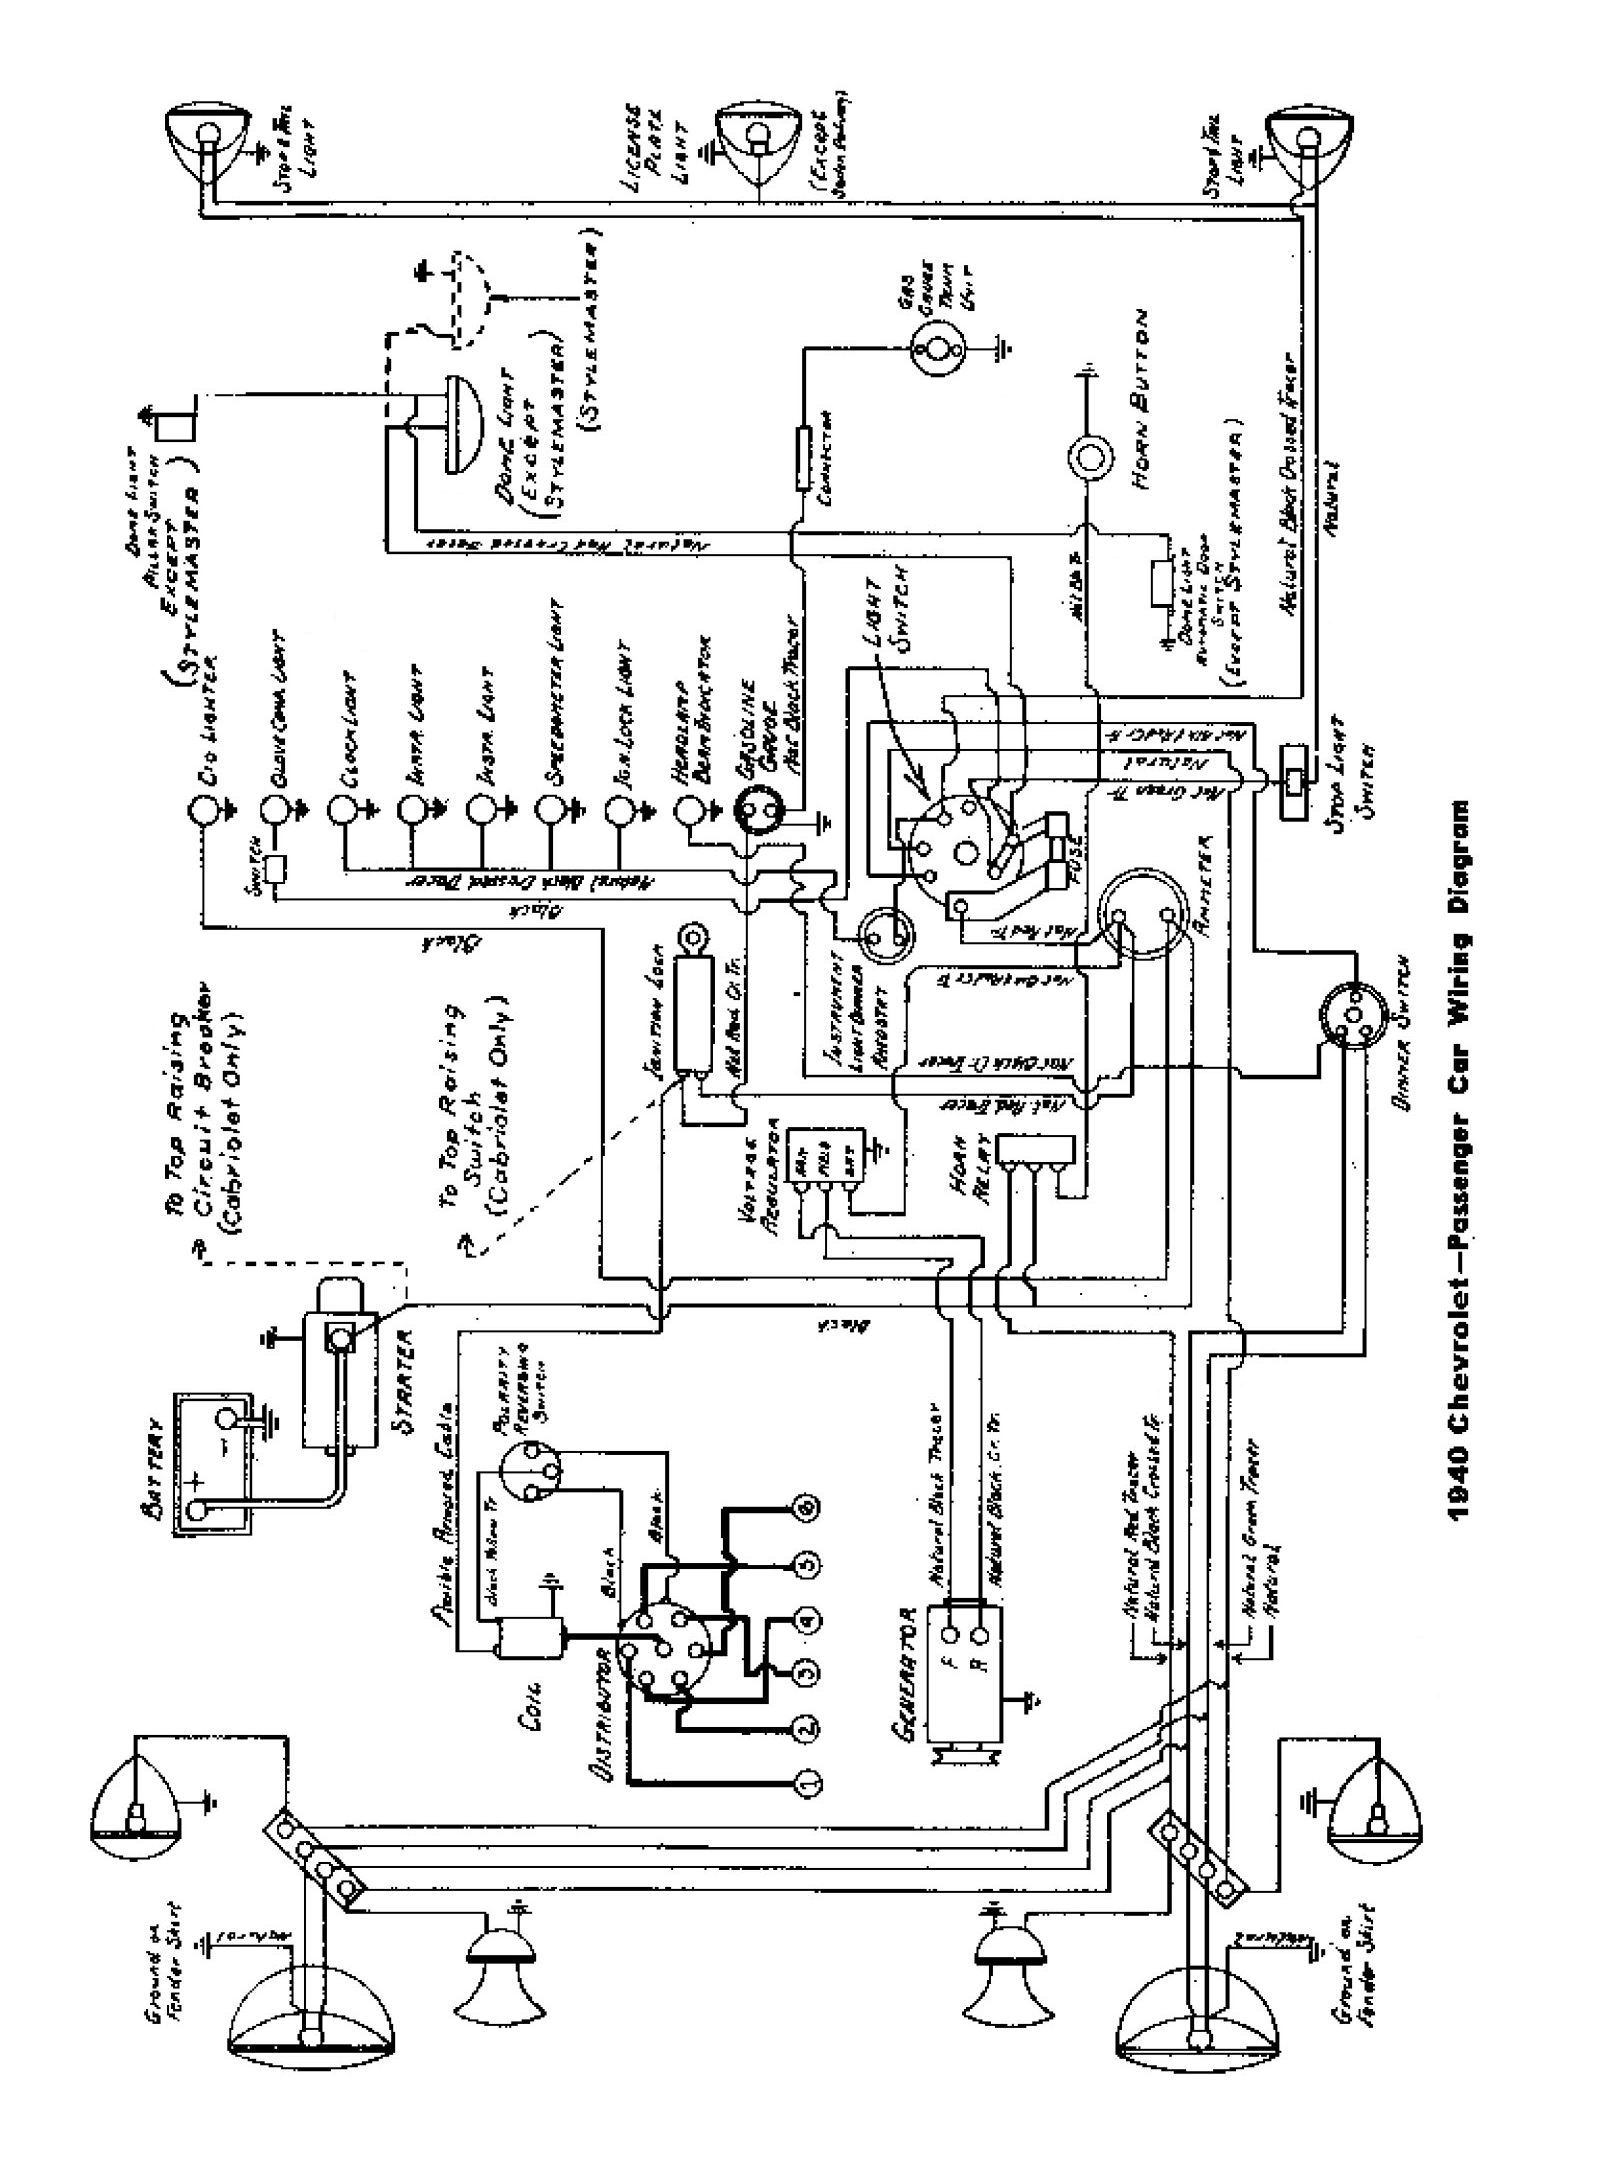 1974 Ford F250 Wiring Diagram from schematron.org